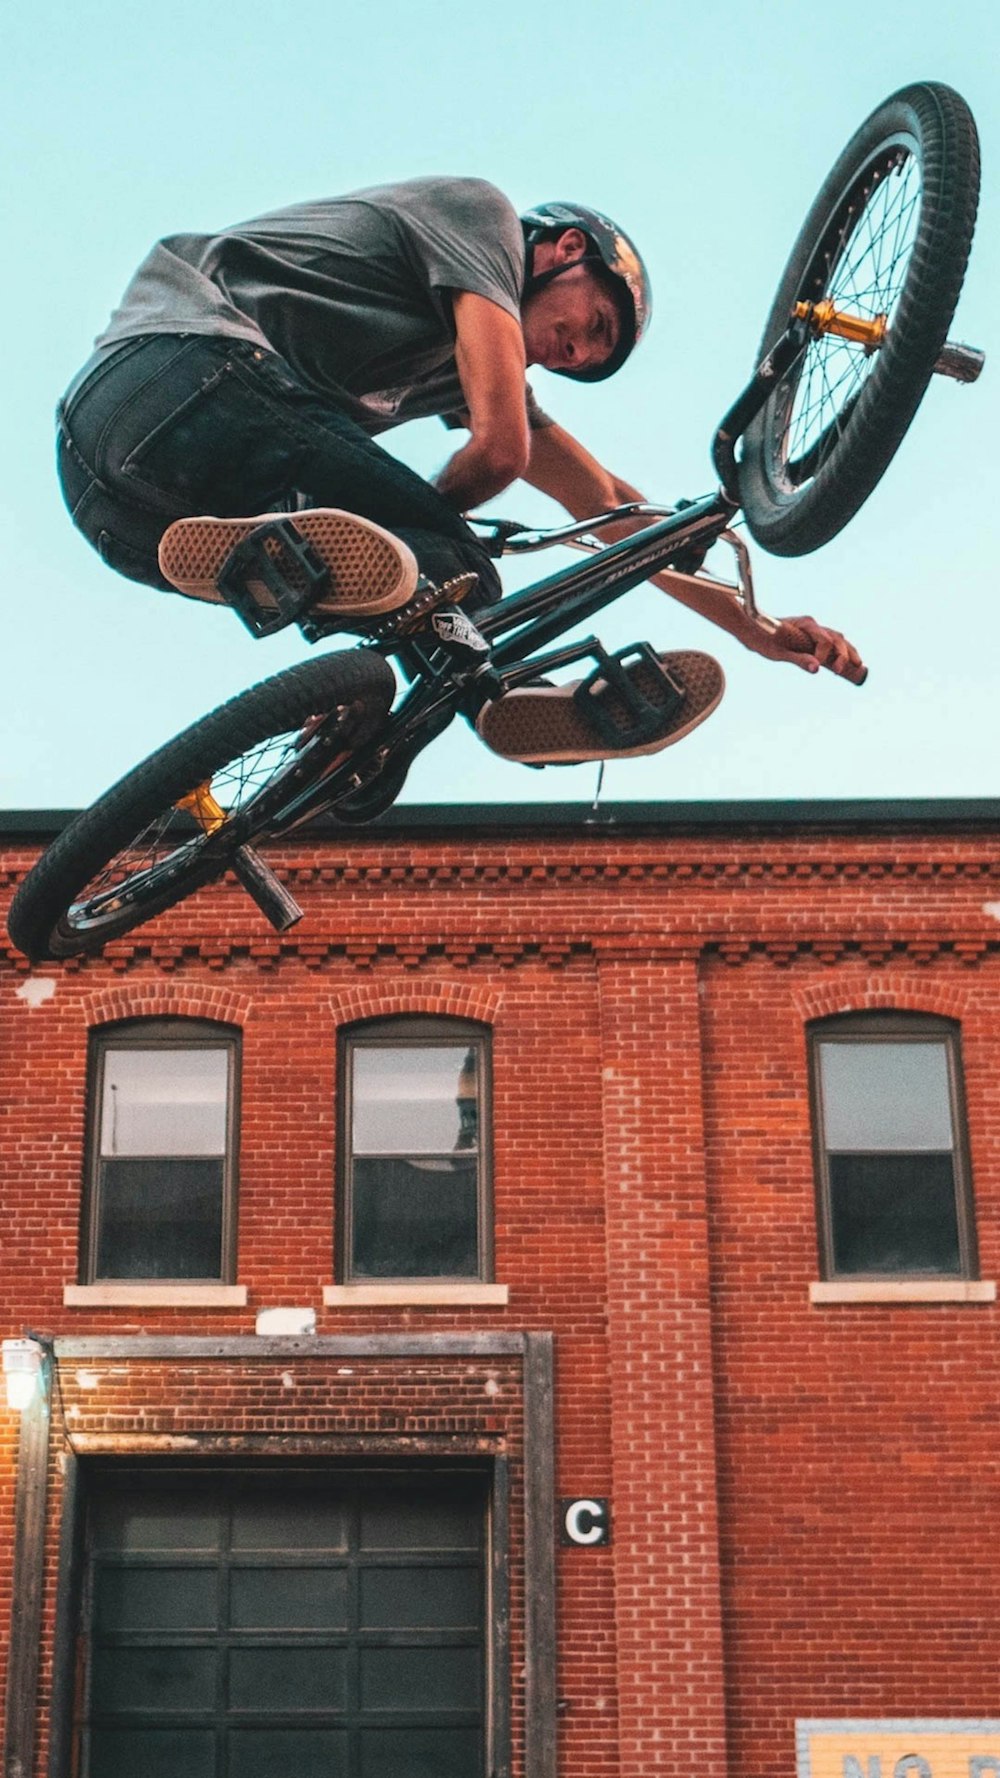 man riding on black BMX bike in mid-air